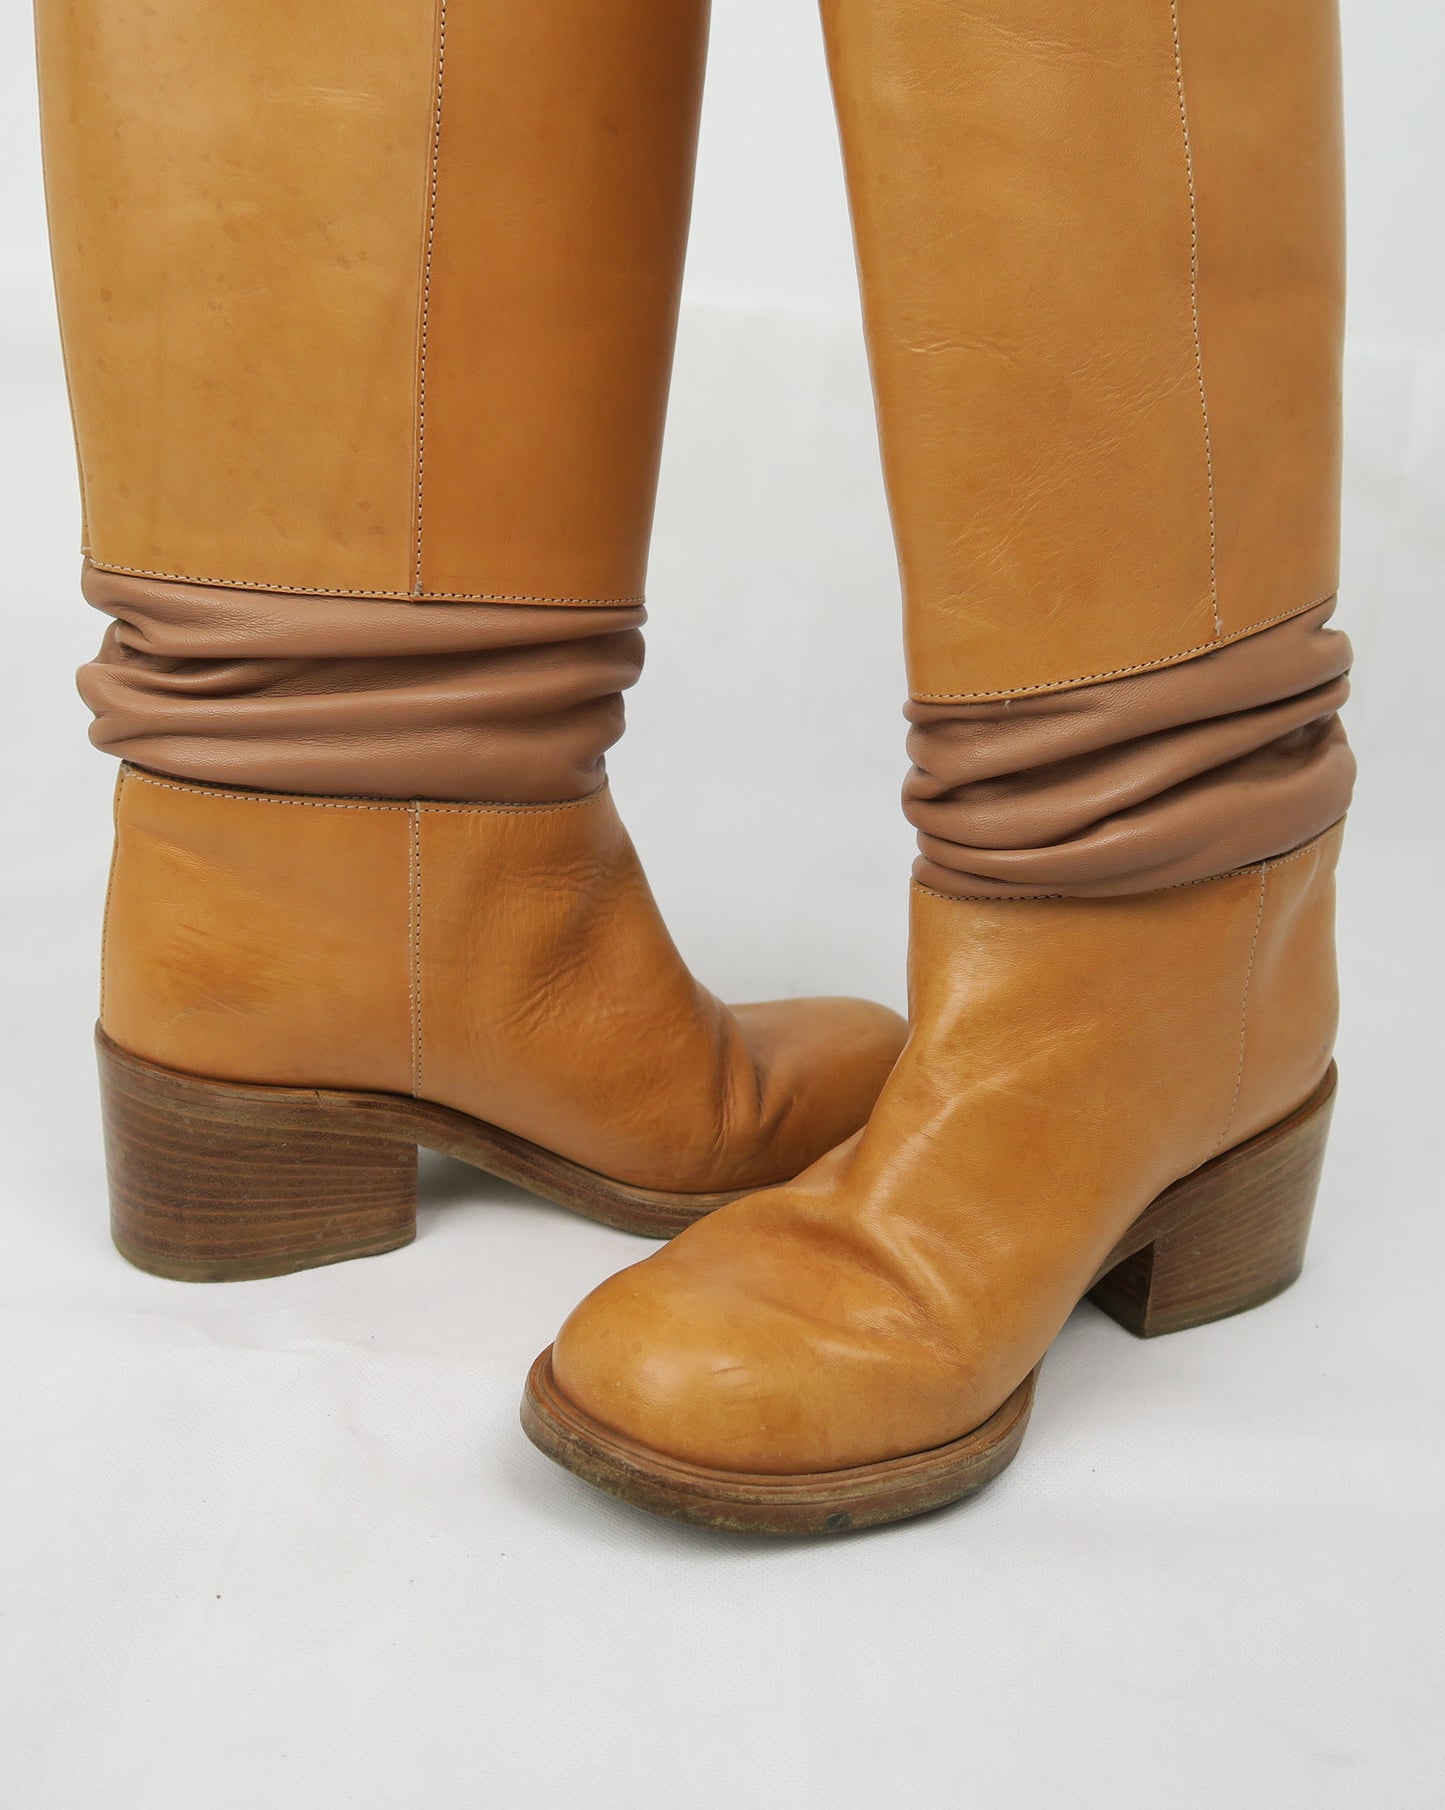 A.F VANDEVORST boots